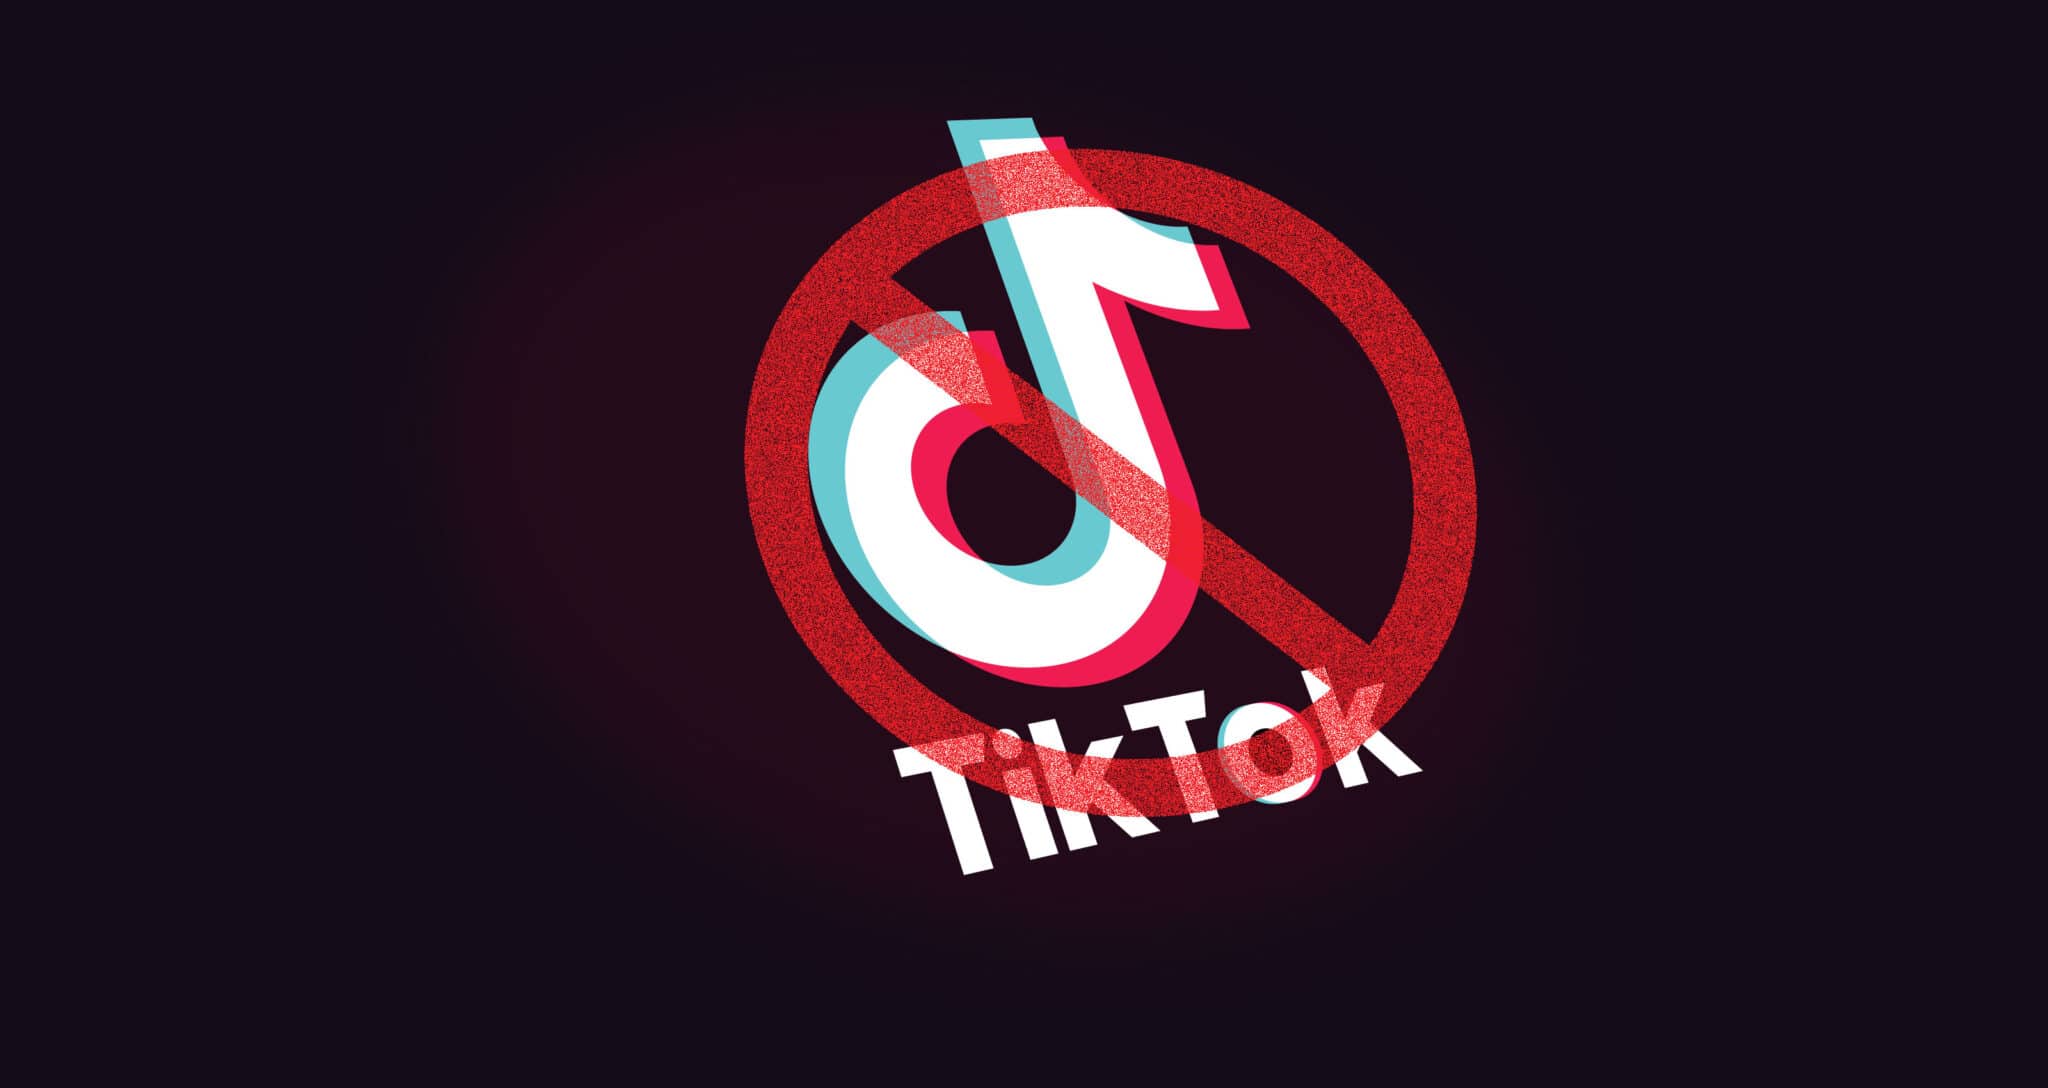 Pta Blocks Tiktok In Pakistan For Inappropriate Content